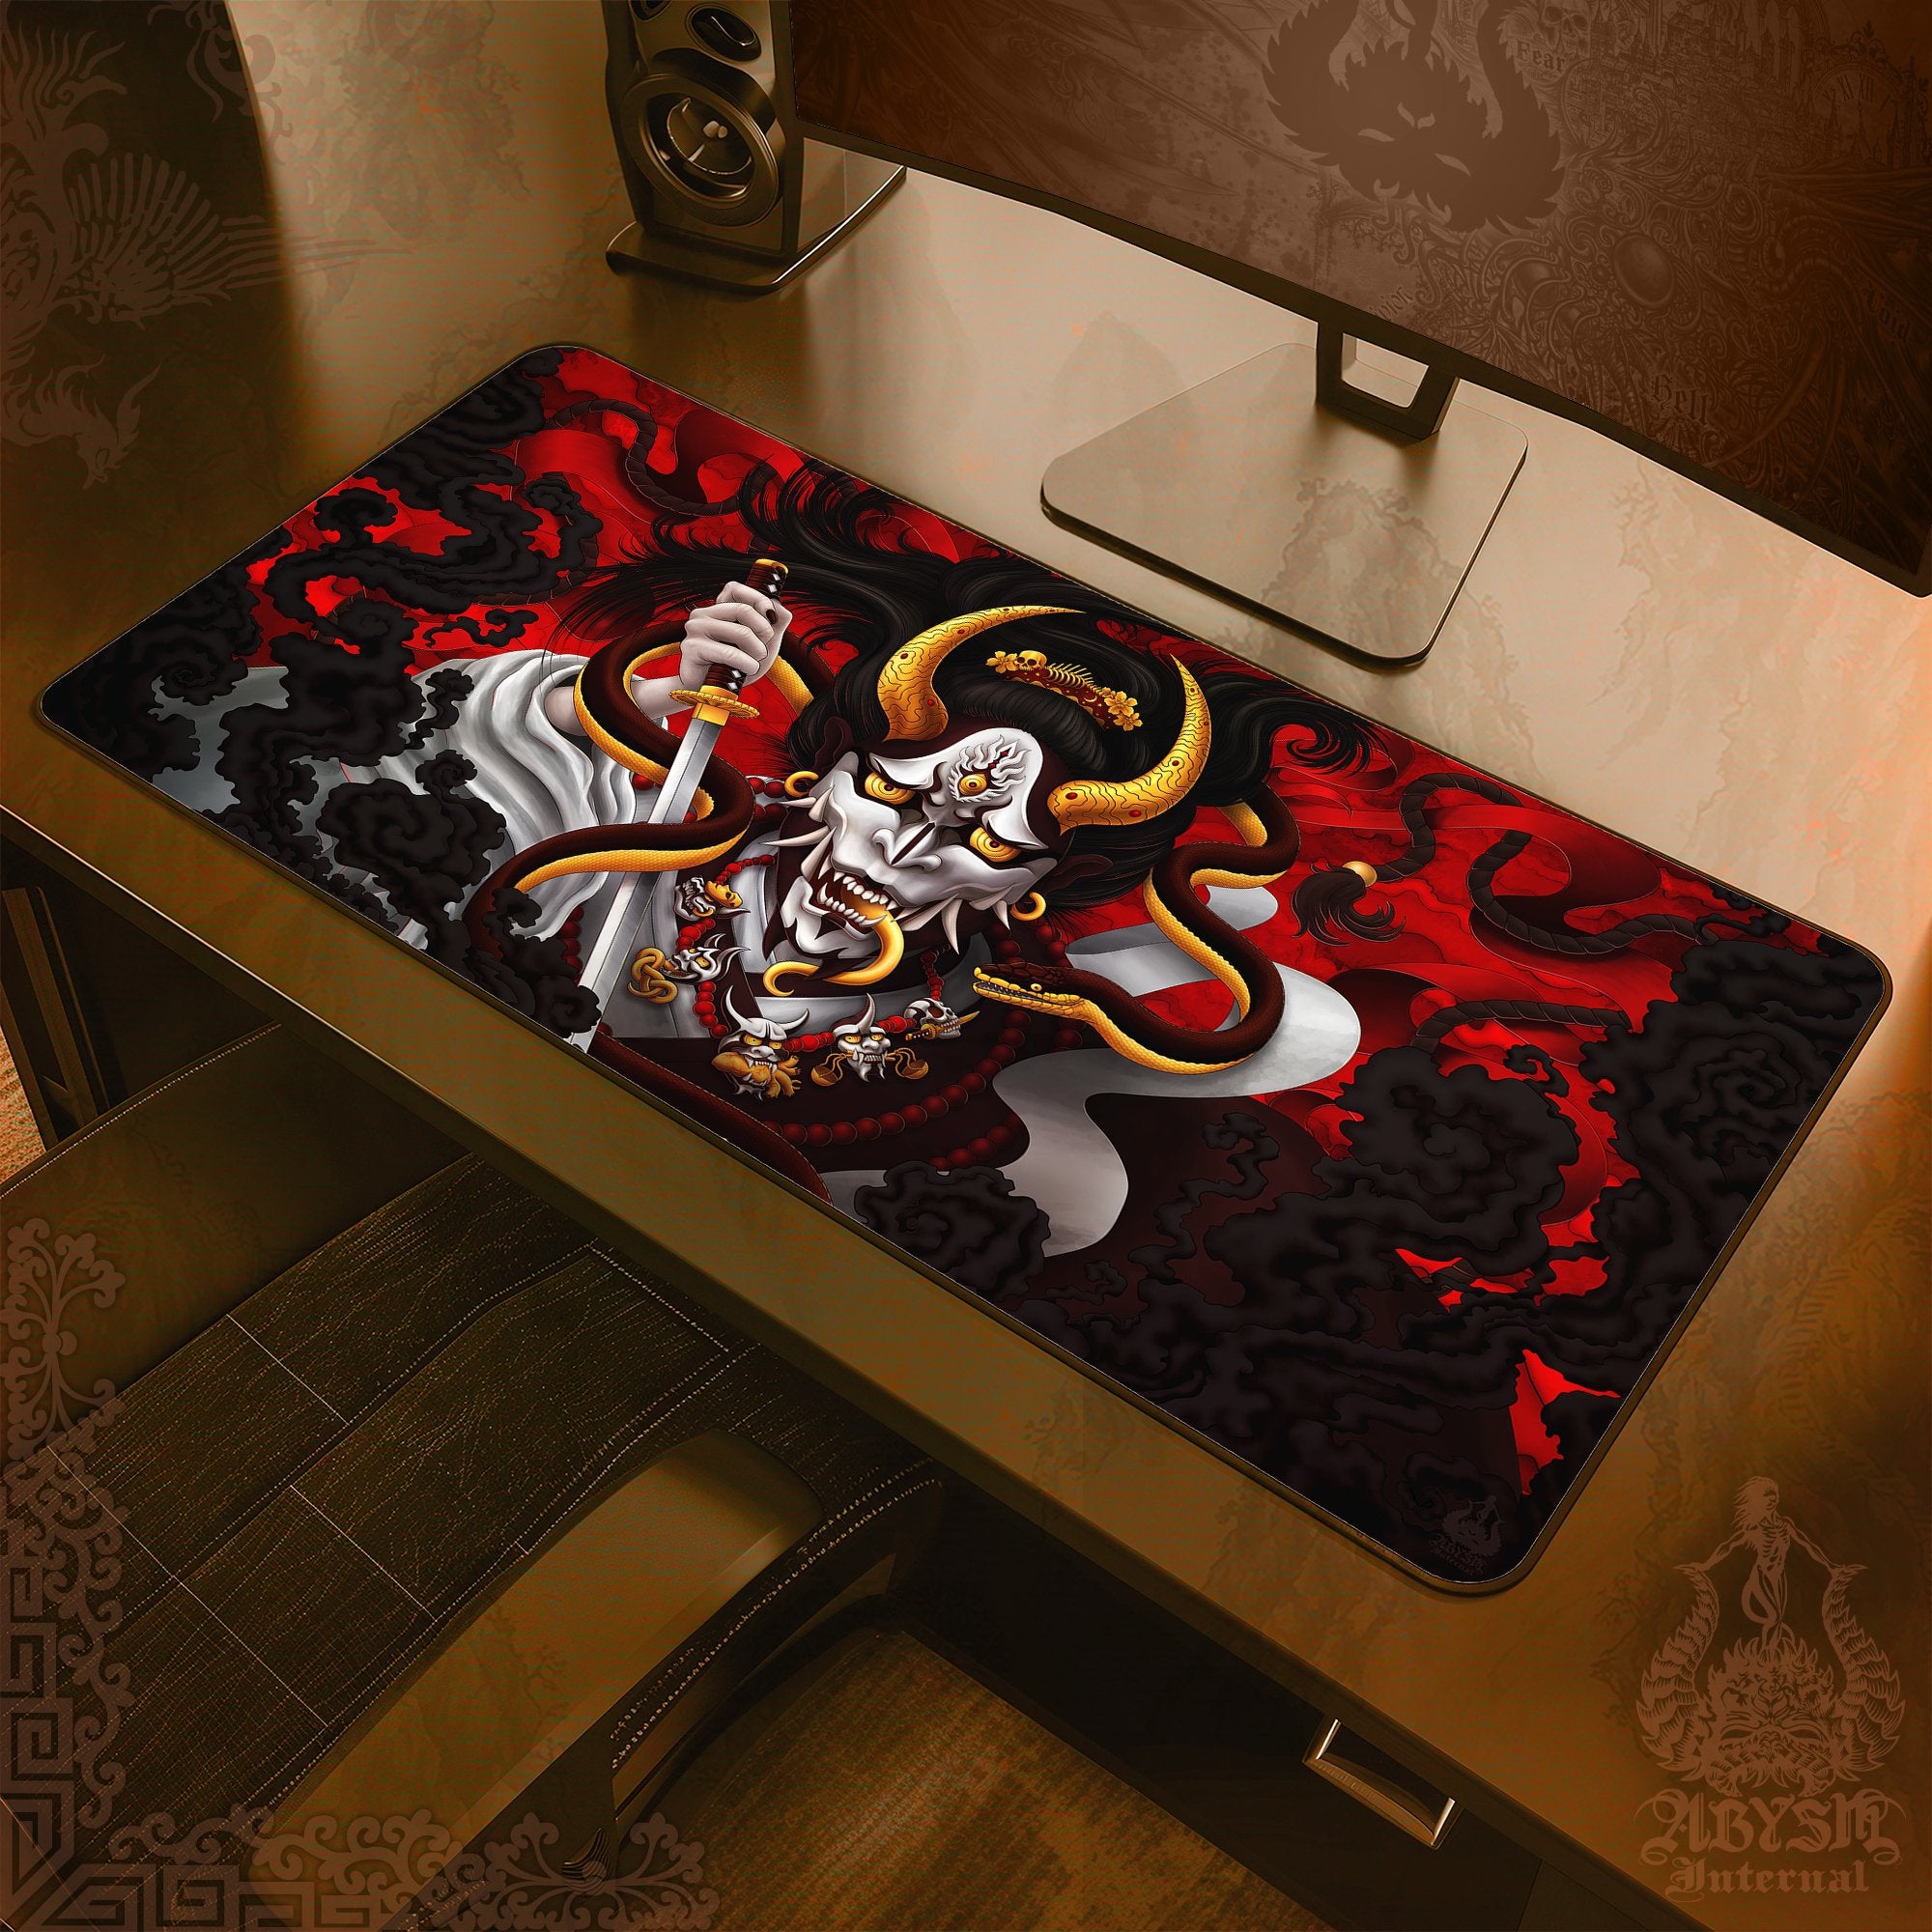 Hannya Desk Mat, Youkai Gaming Mouse Pad, Japanese Demon Table Protector Cover, Snake Workpad, Fantasy Anime and Manga Art Print - Original - Abysm Internal